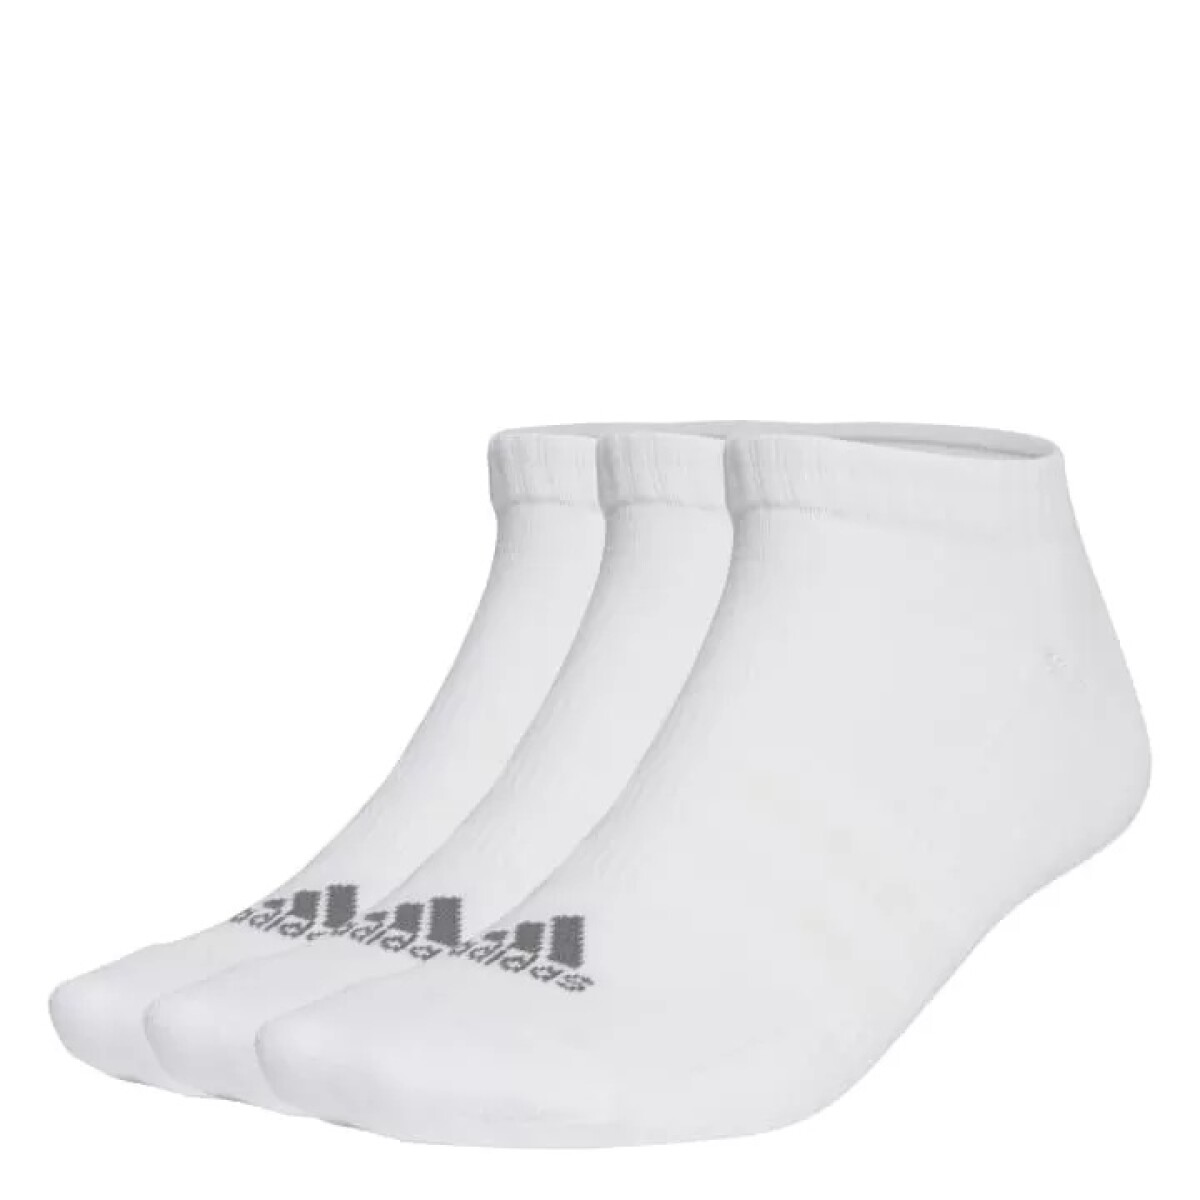 Media Adidas Training Unisex Spw Low 3p C: white/grey four - S/C 